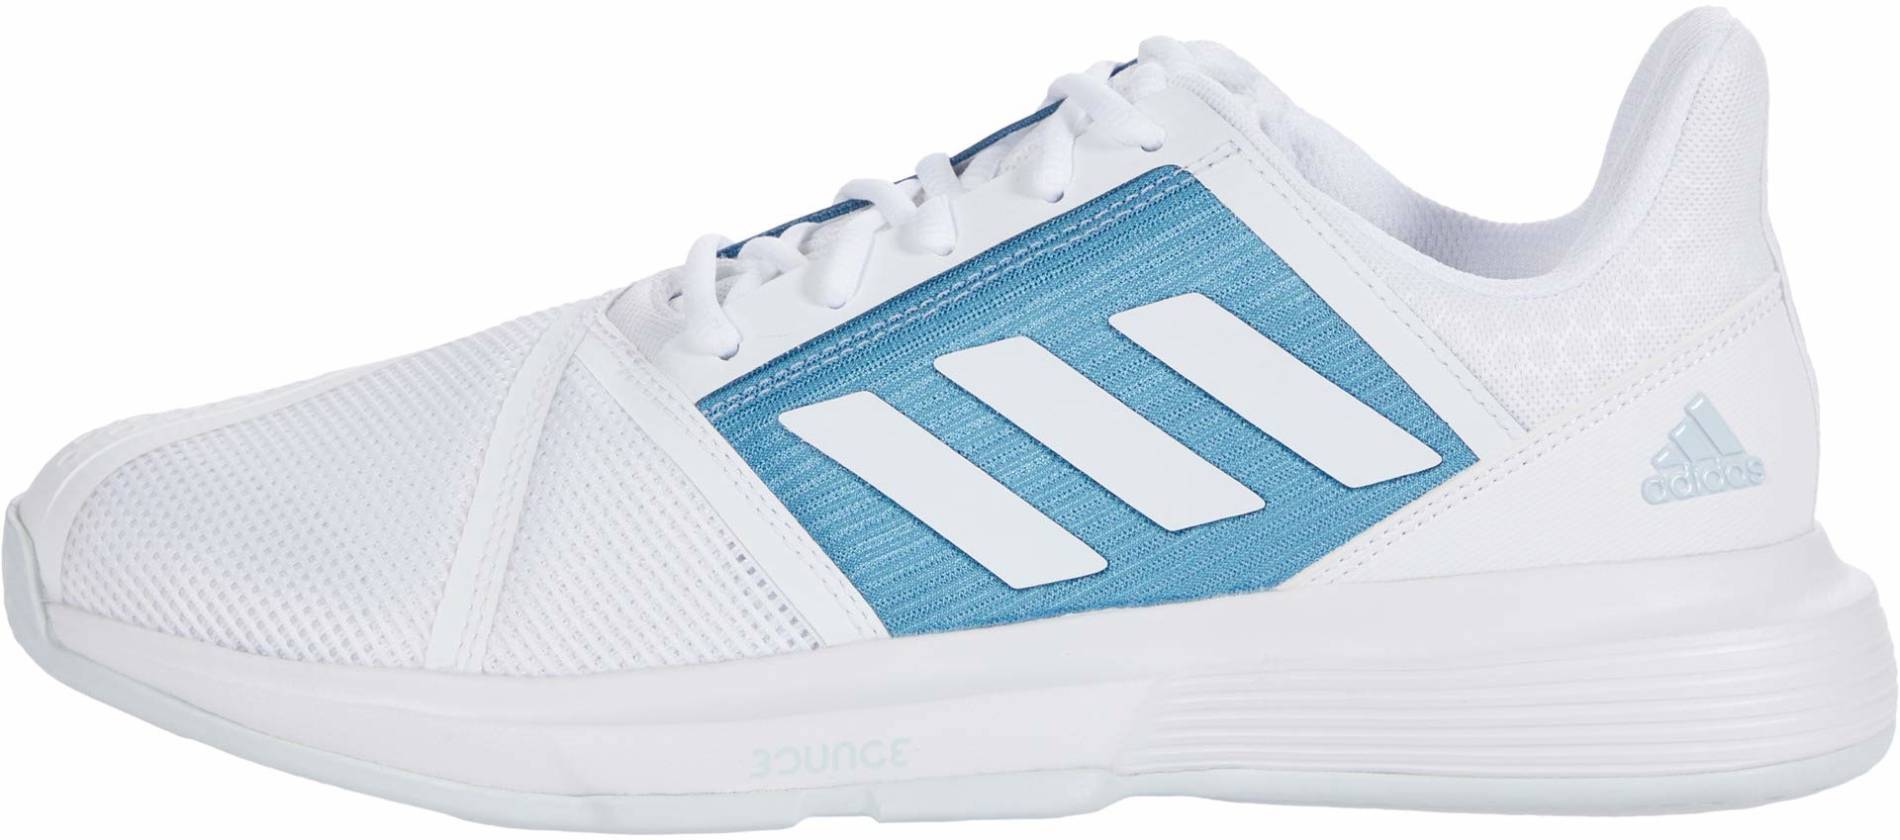 adidas courtjam bounce men's tennis shoes